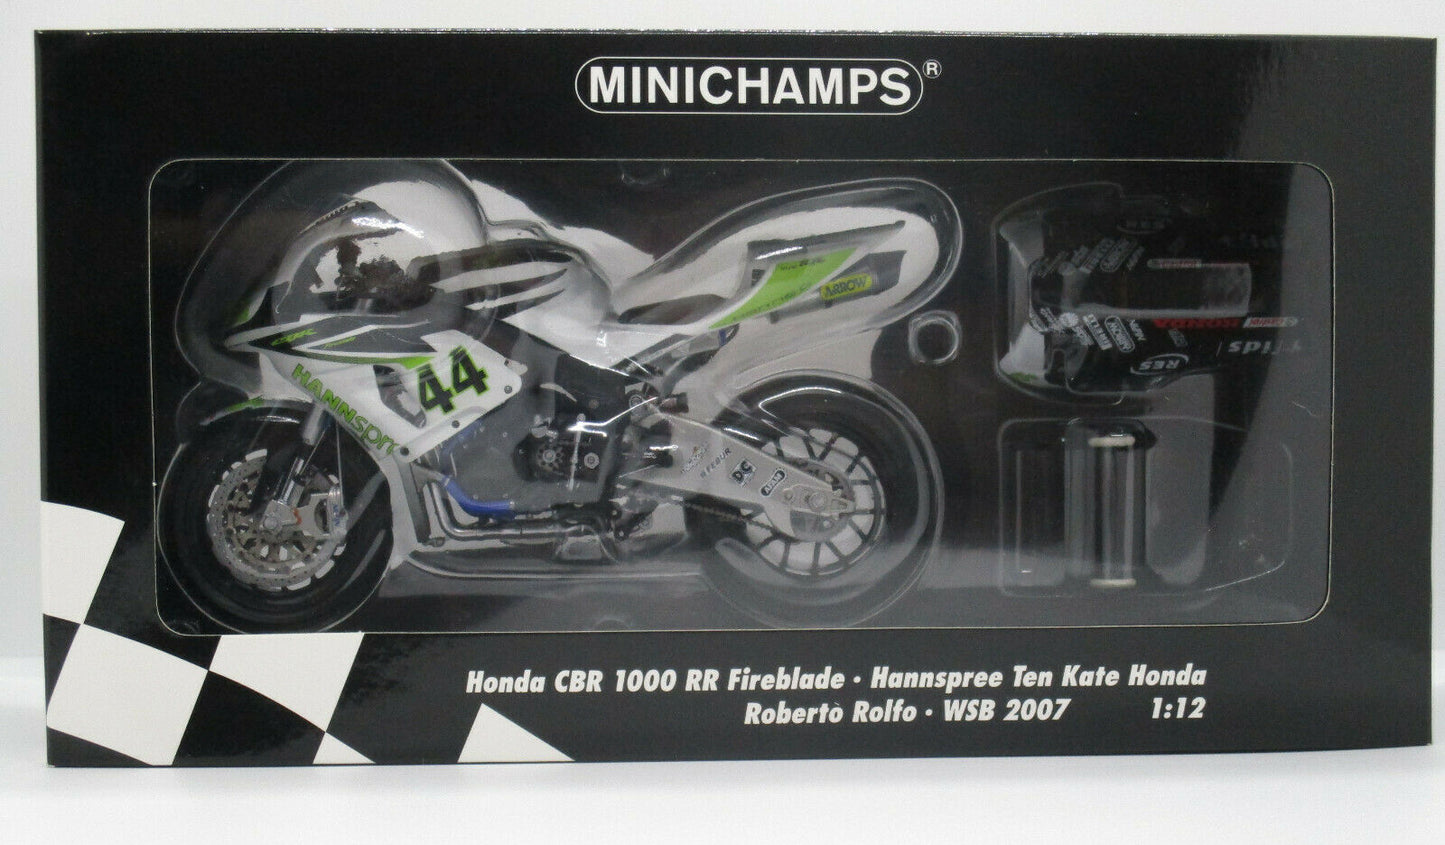 Minichamps 1:12 Honda CBR 1000 RR Fireblade Roberto Rolfo Team Hannspree Ten Kate Honda #44 World Superbike 2007 122071244